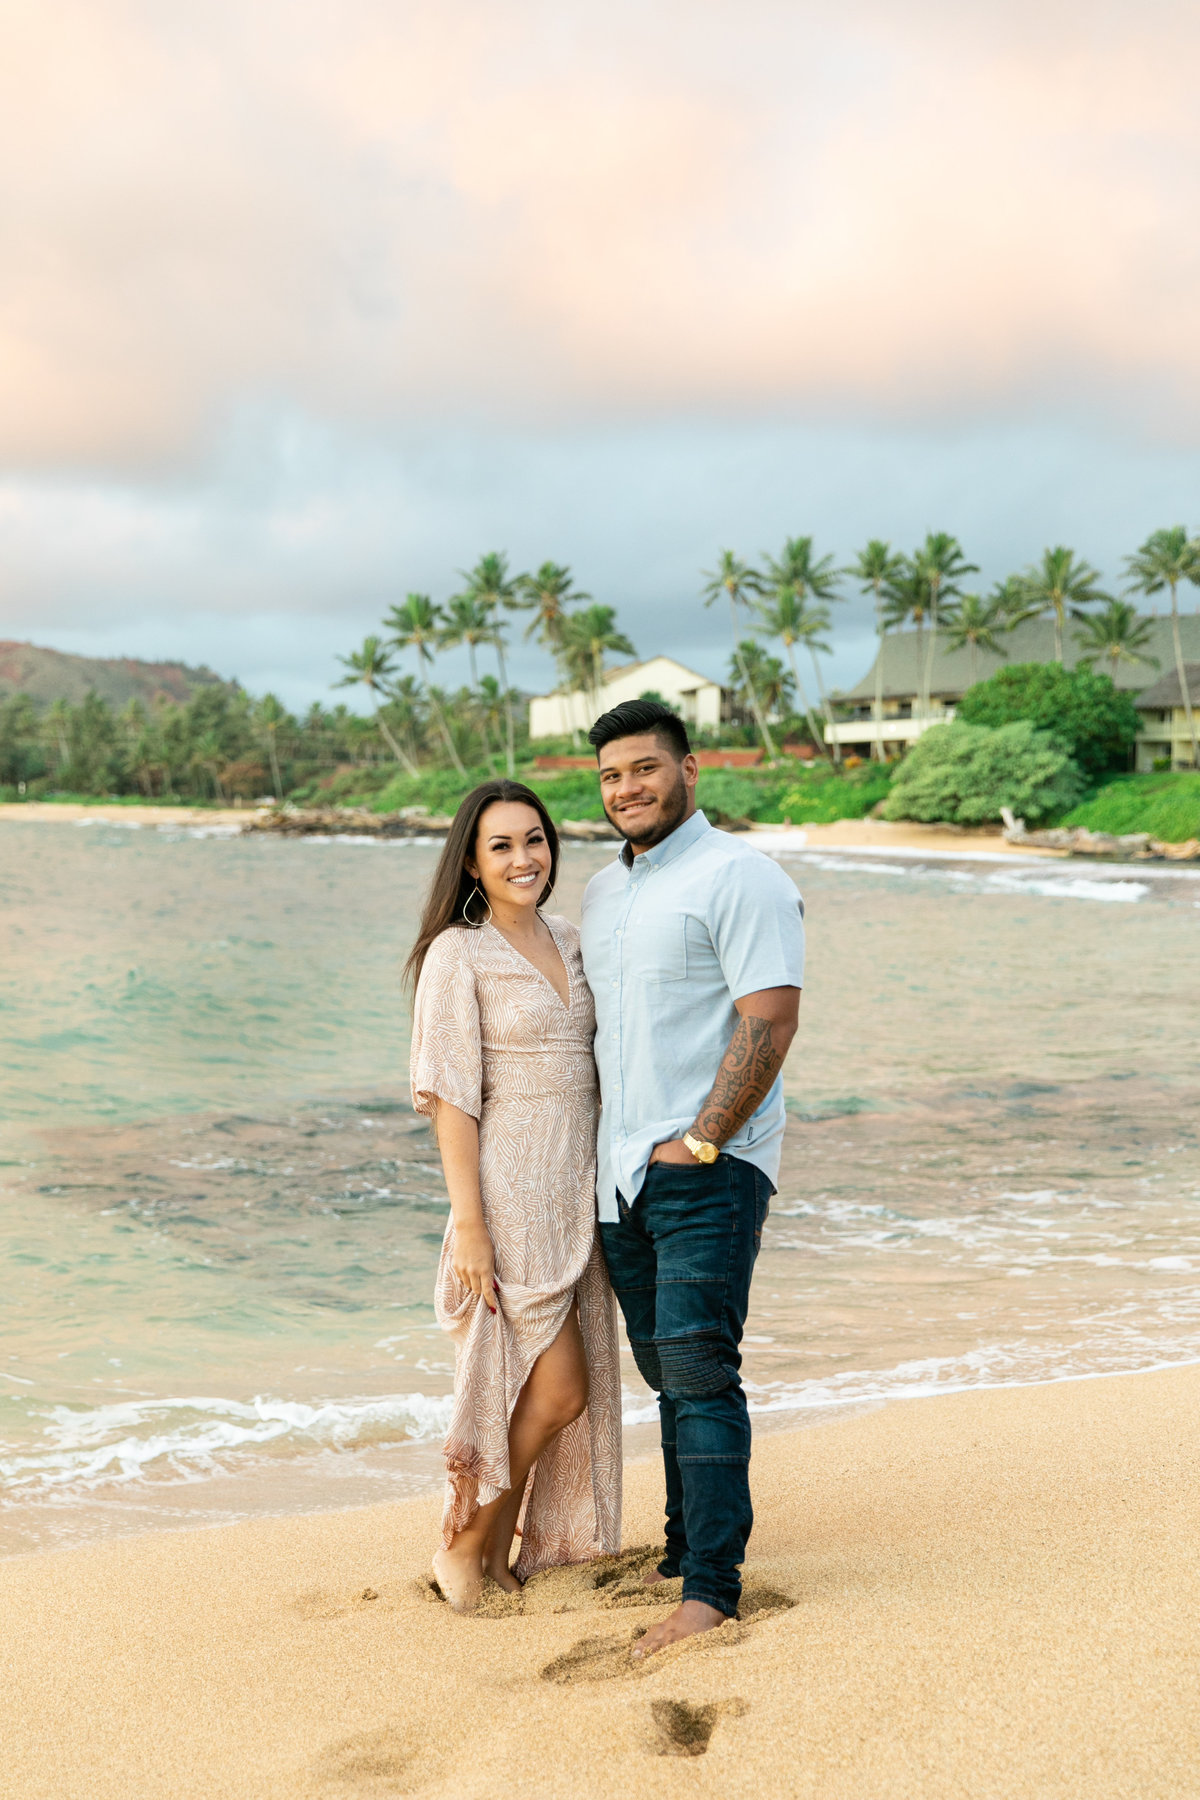 Karlie Colleen Photography - Kauai Hawaii Wedding Photography - Sydney & BJ -1